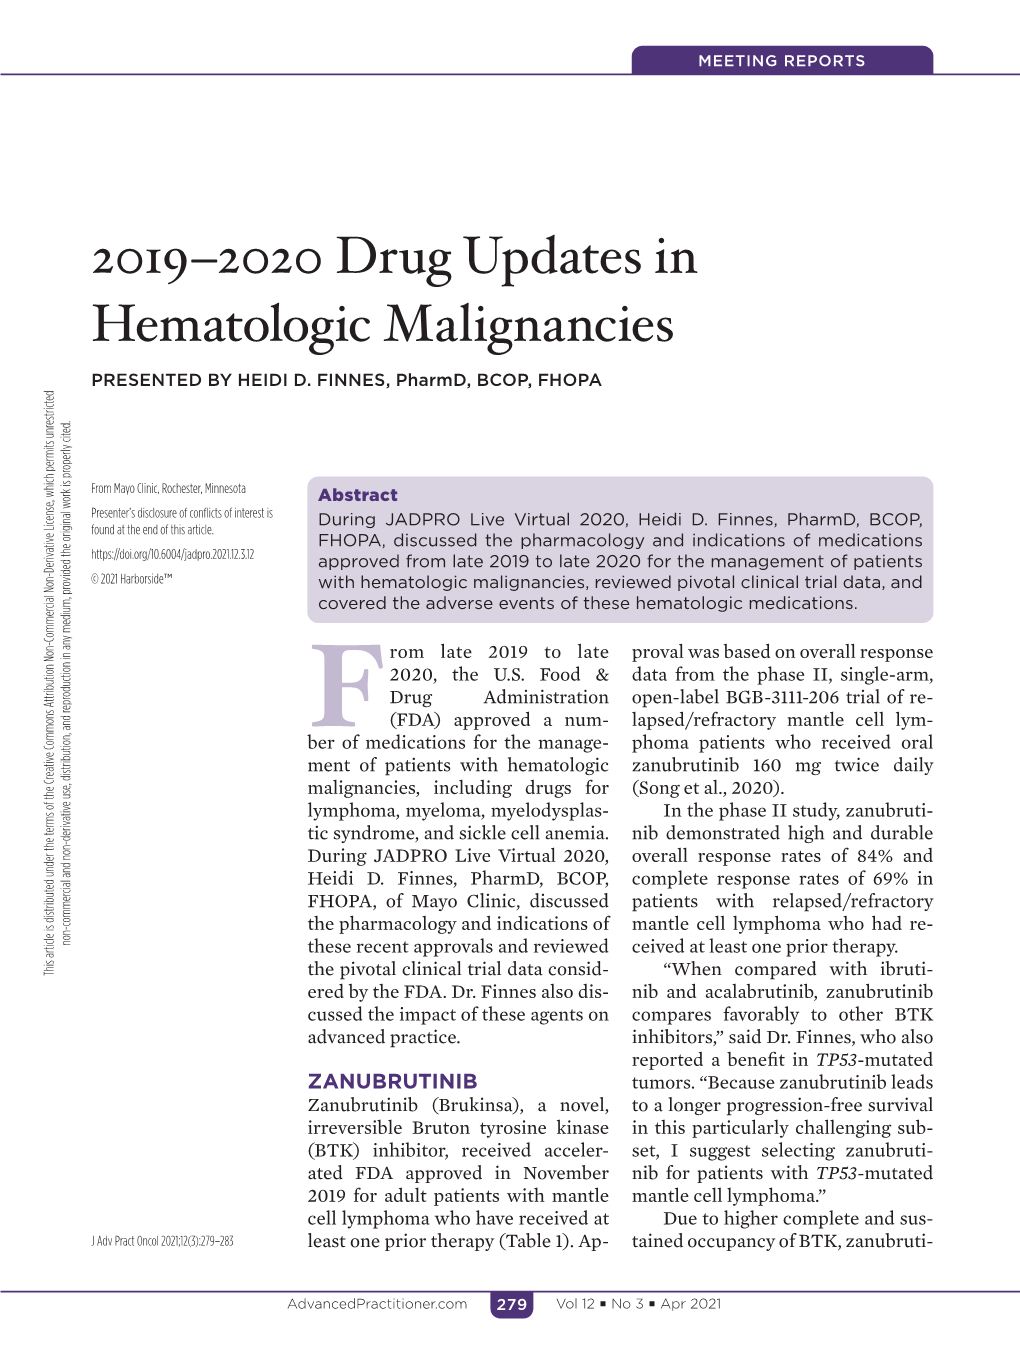 2019–2020 Drug Updates in Hematologic Malignancies